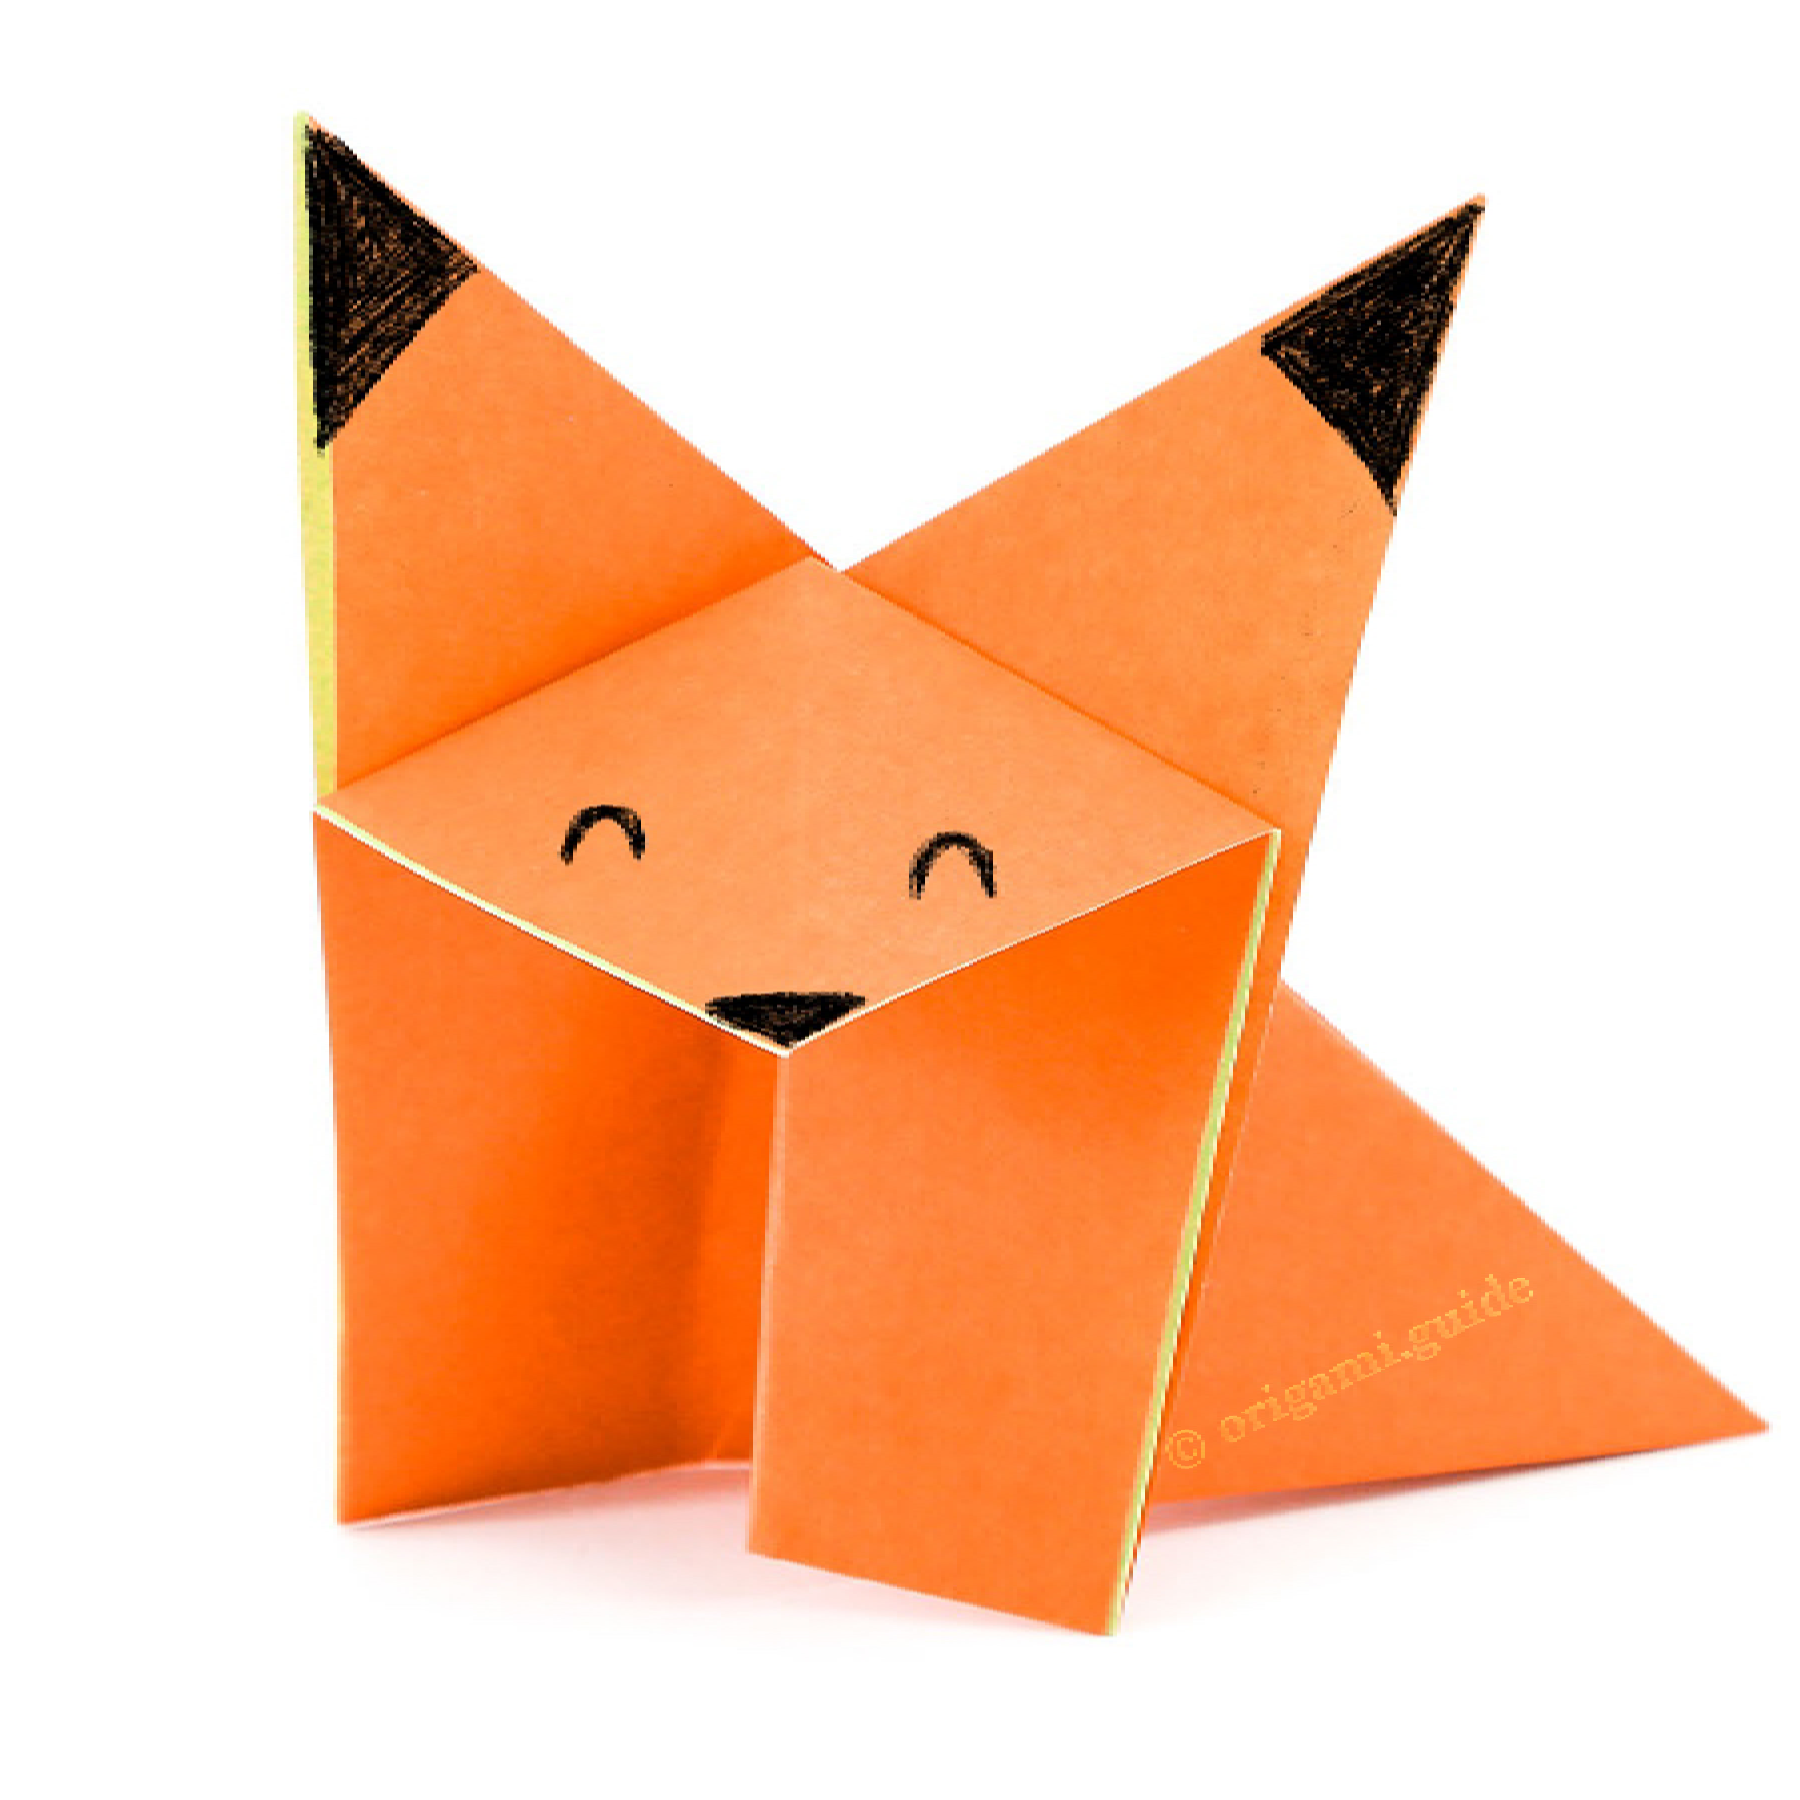 Versatility of Origami